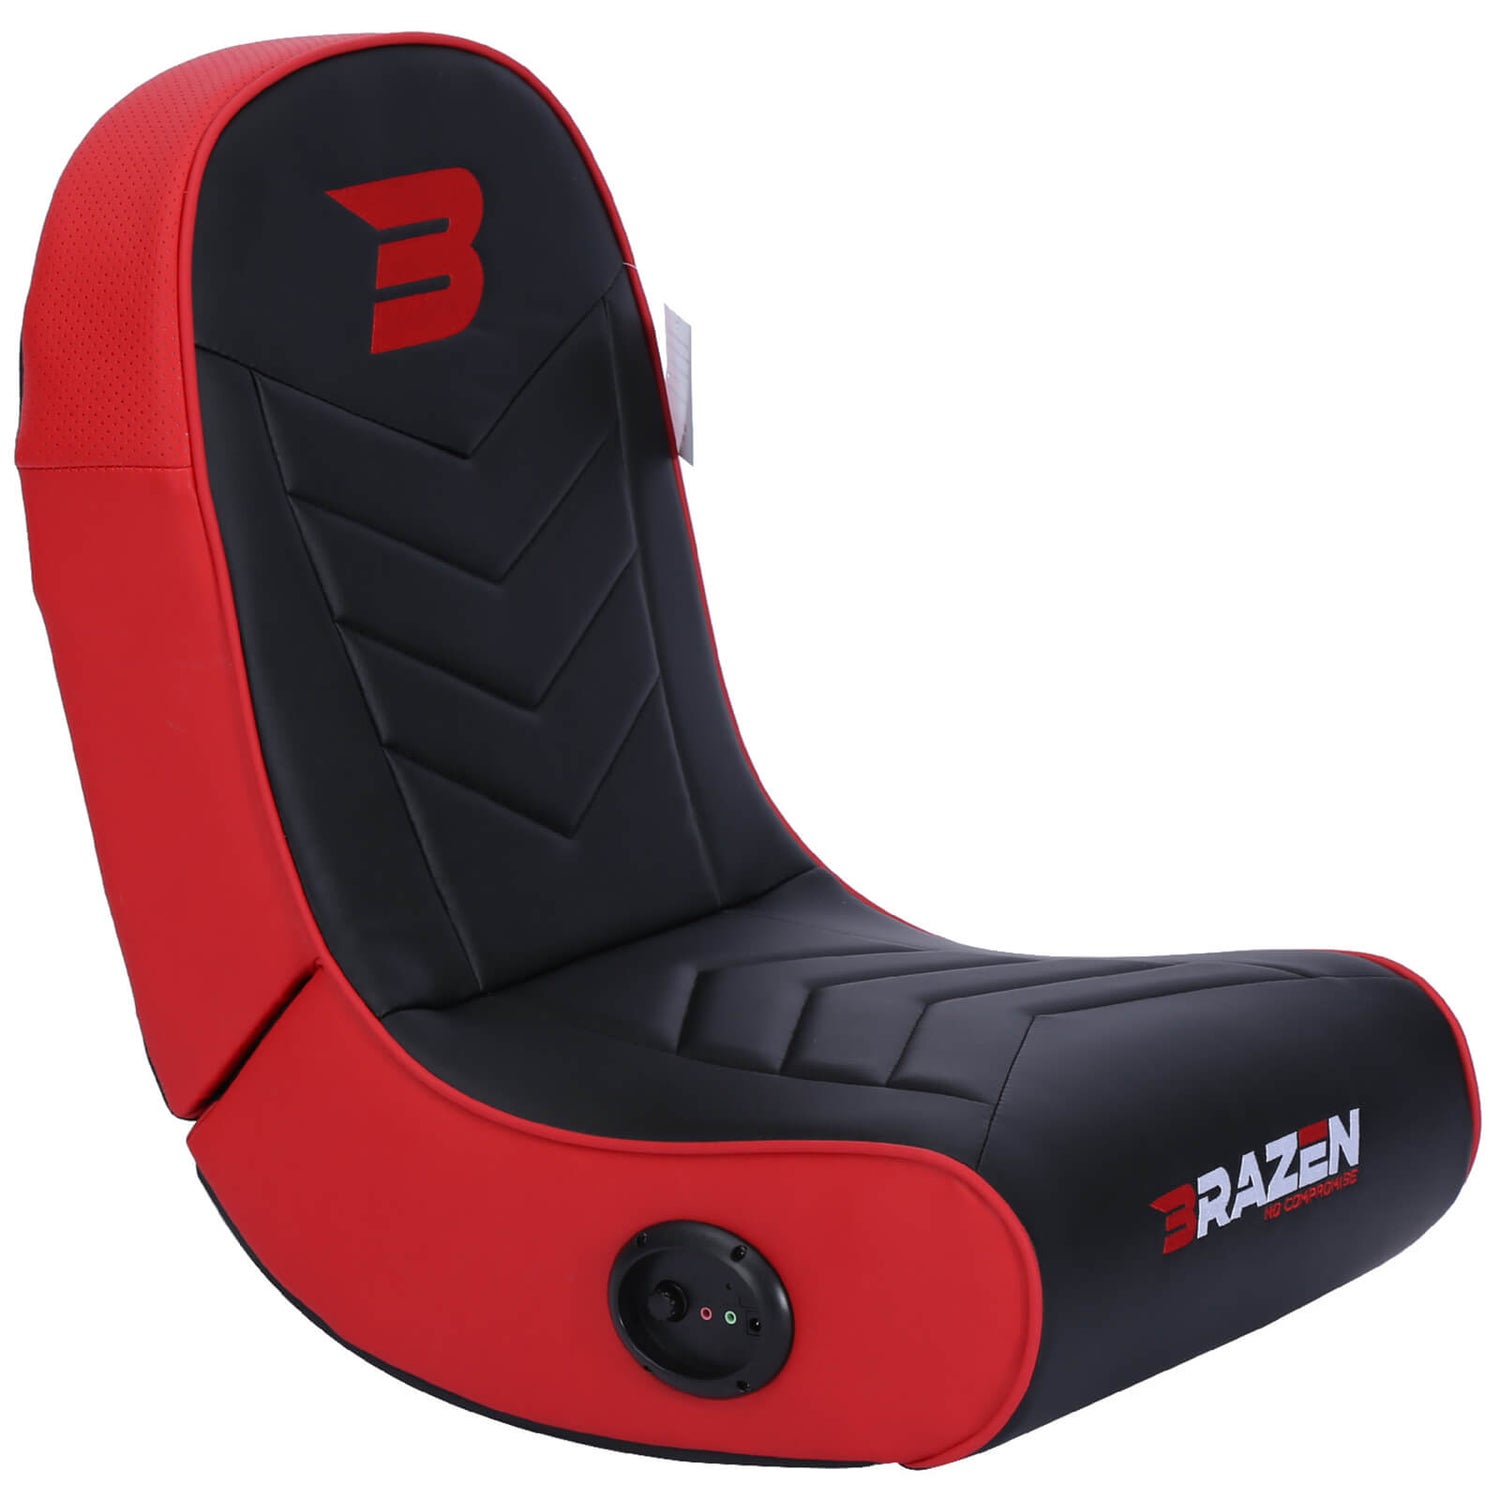 BraZen Stingray 2.0 Surround Sound Gaming Chair - Red